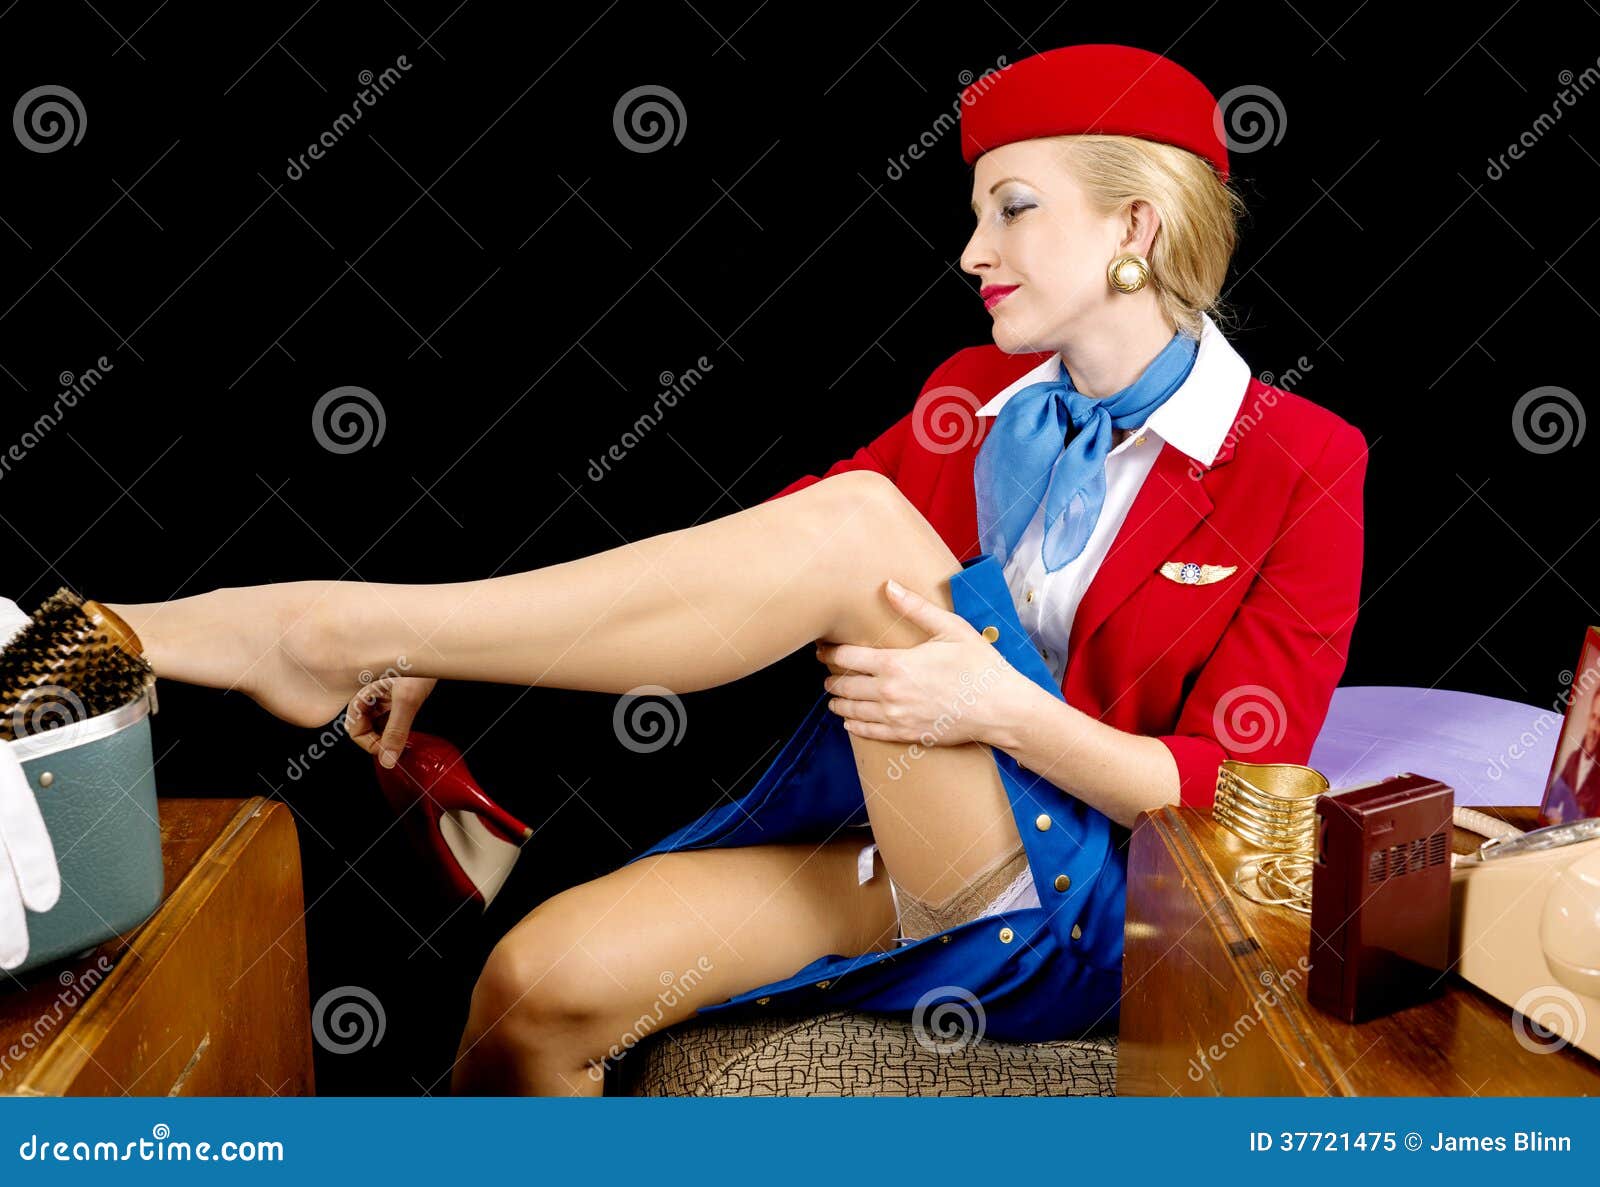 Stewardess in stockings